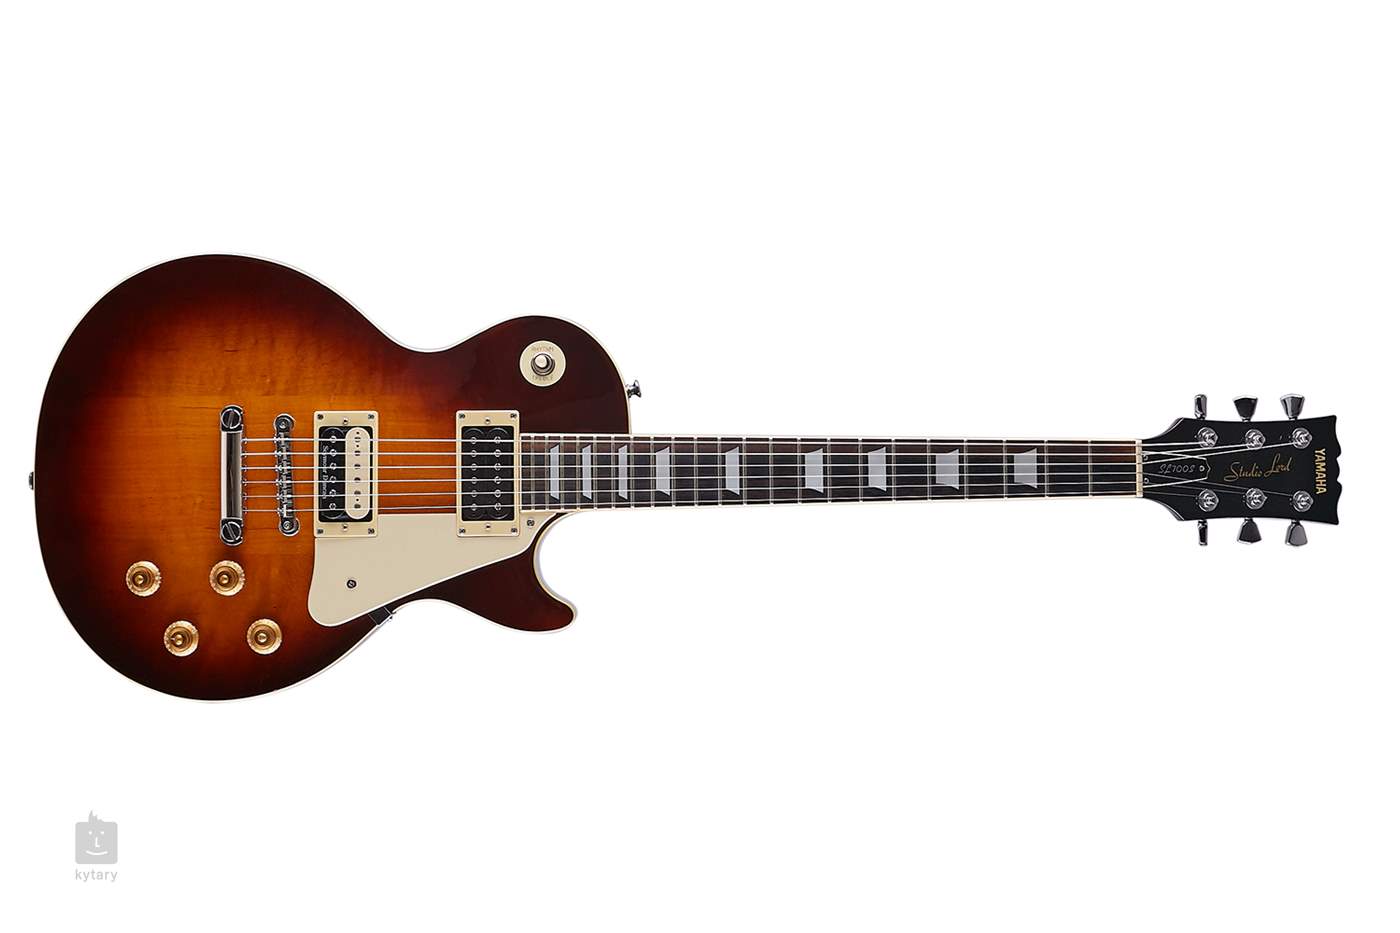 YAMAHA 1980 Studio Lord SL700S Electric Guitar | Kytary.ie